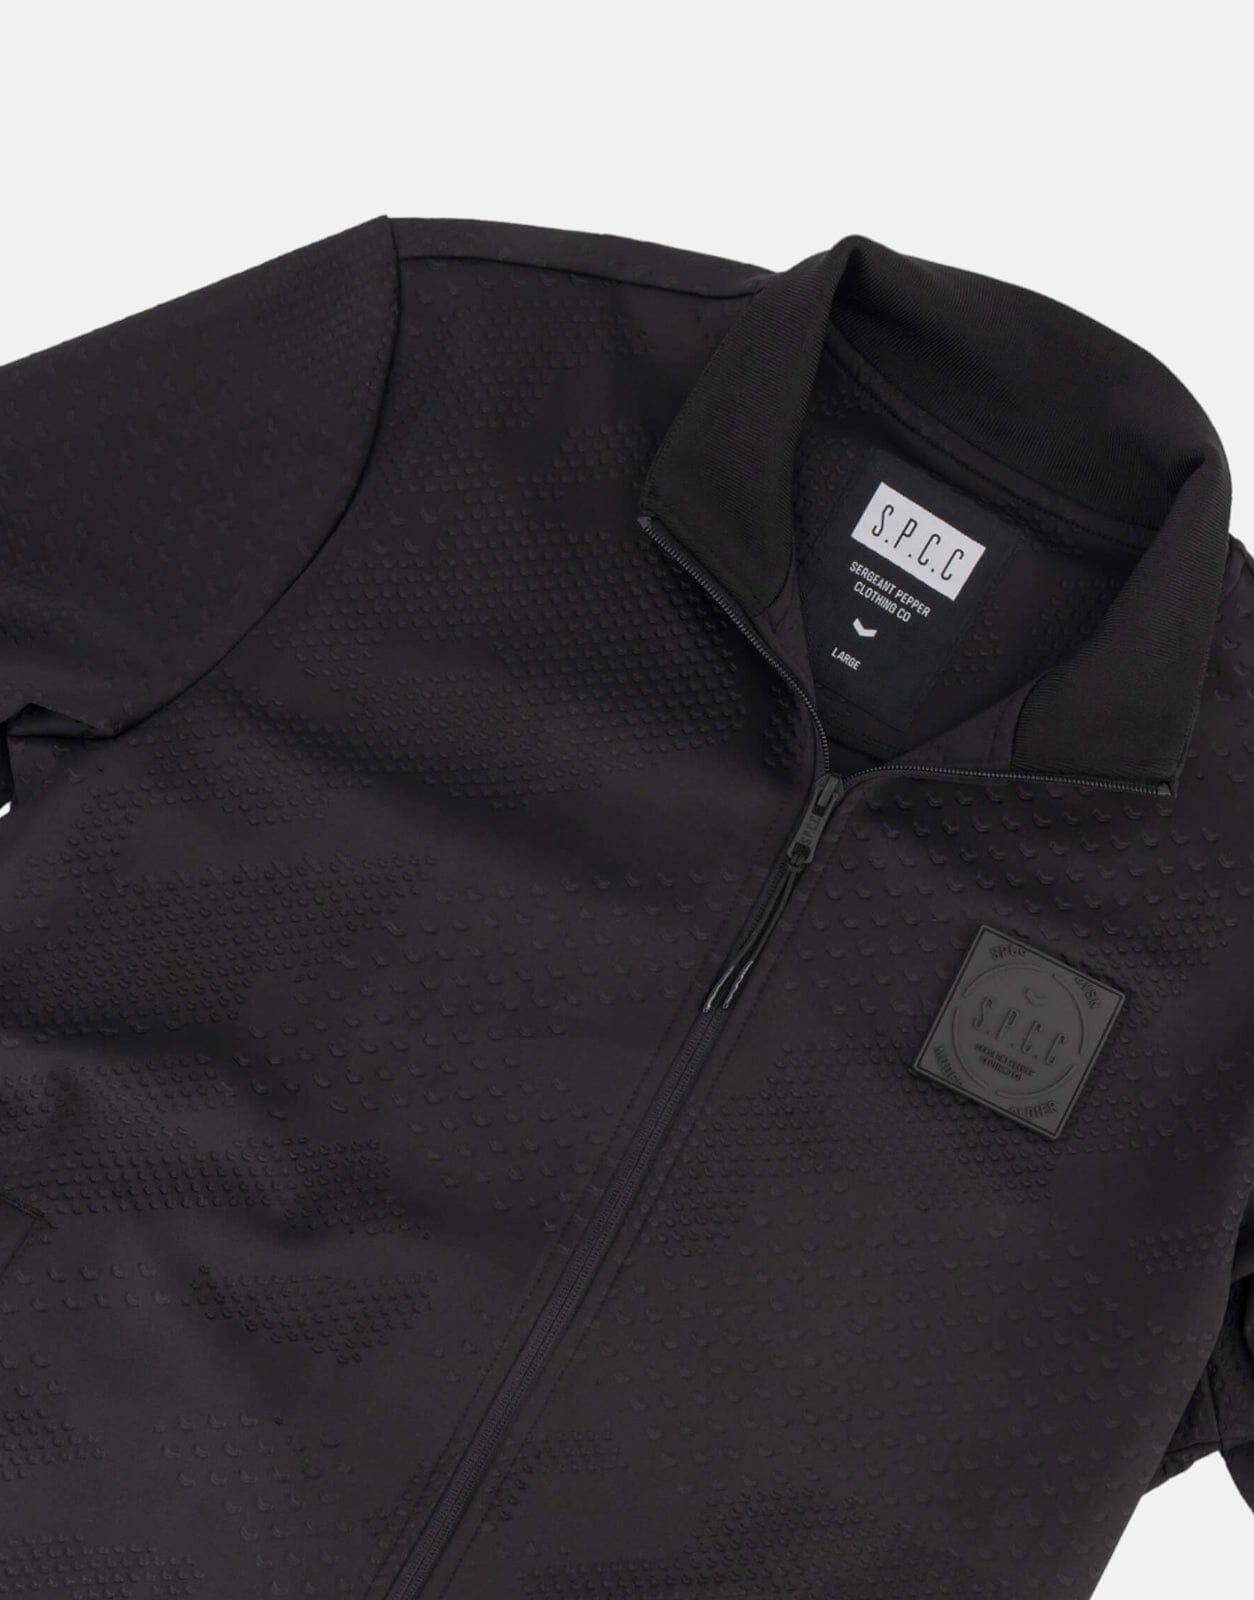 SPCC Spectra Black Jacket - Subwear